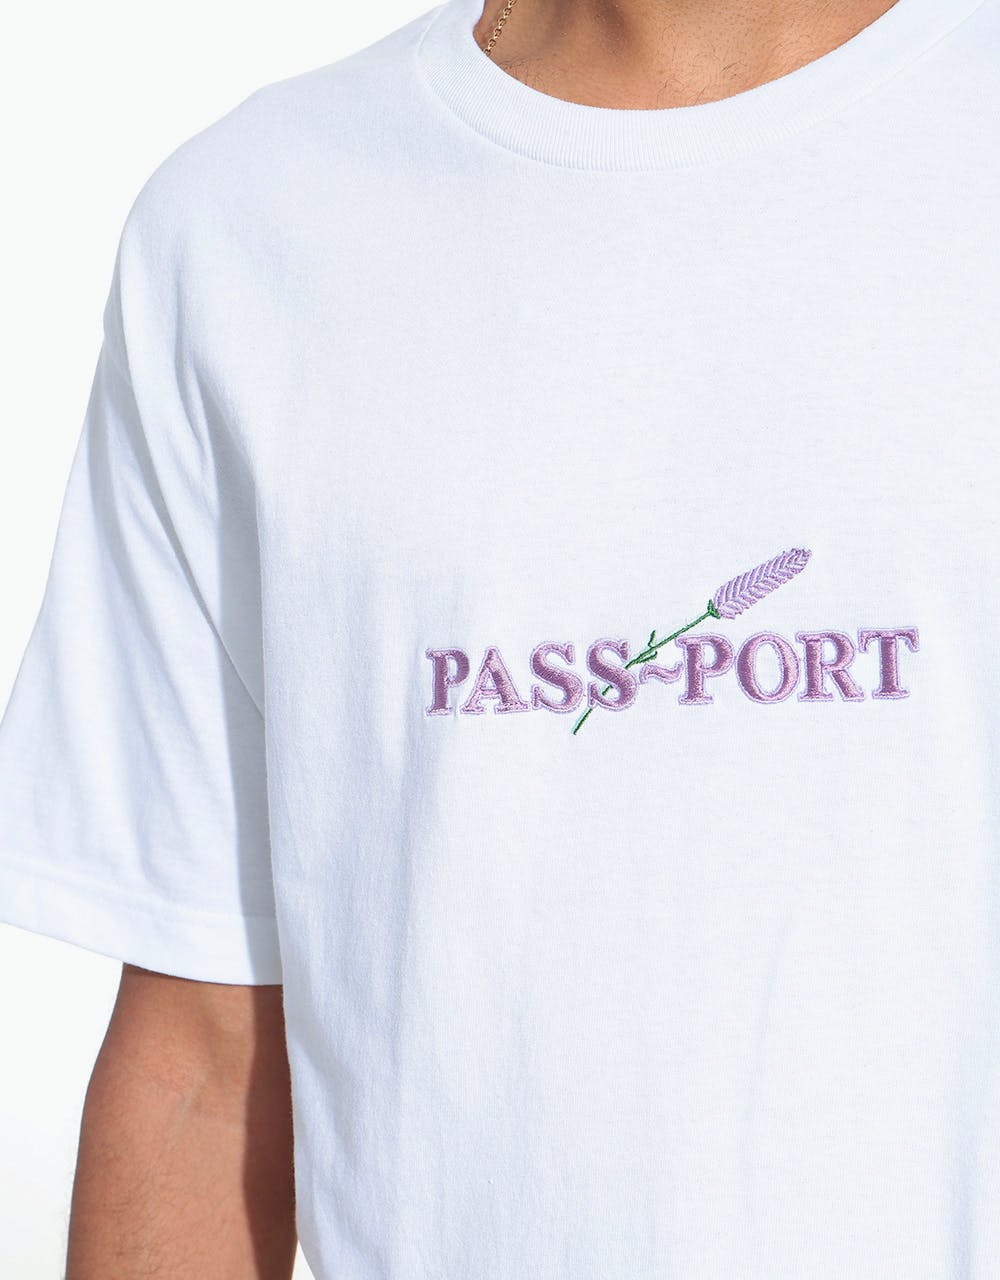 Pass Port Lavender T-Shirt - White